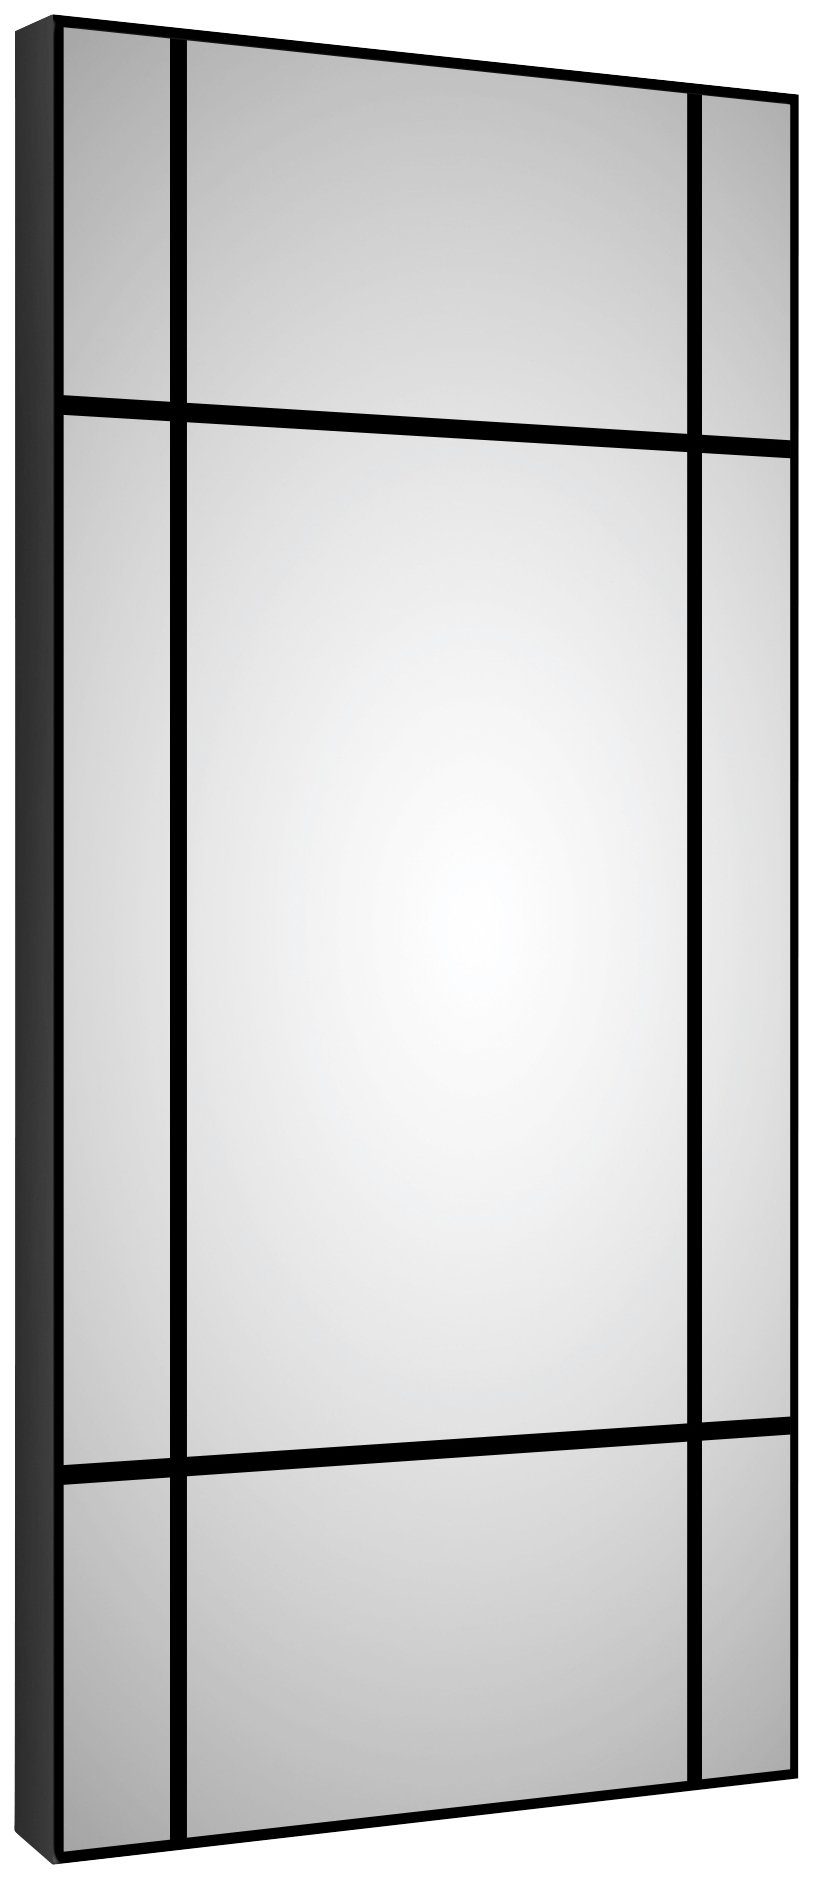 Talos Wandspiegel, dekorativer BxH: Aluminiumrahmen, Spiegel 60x120 cm mit